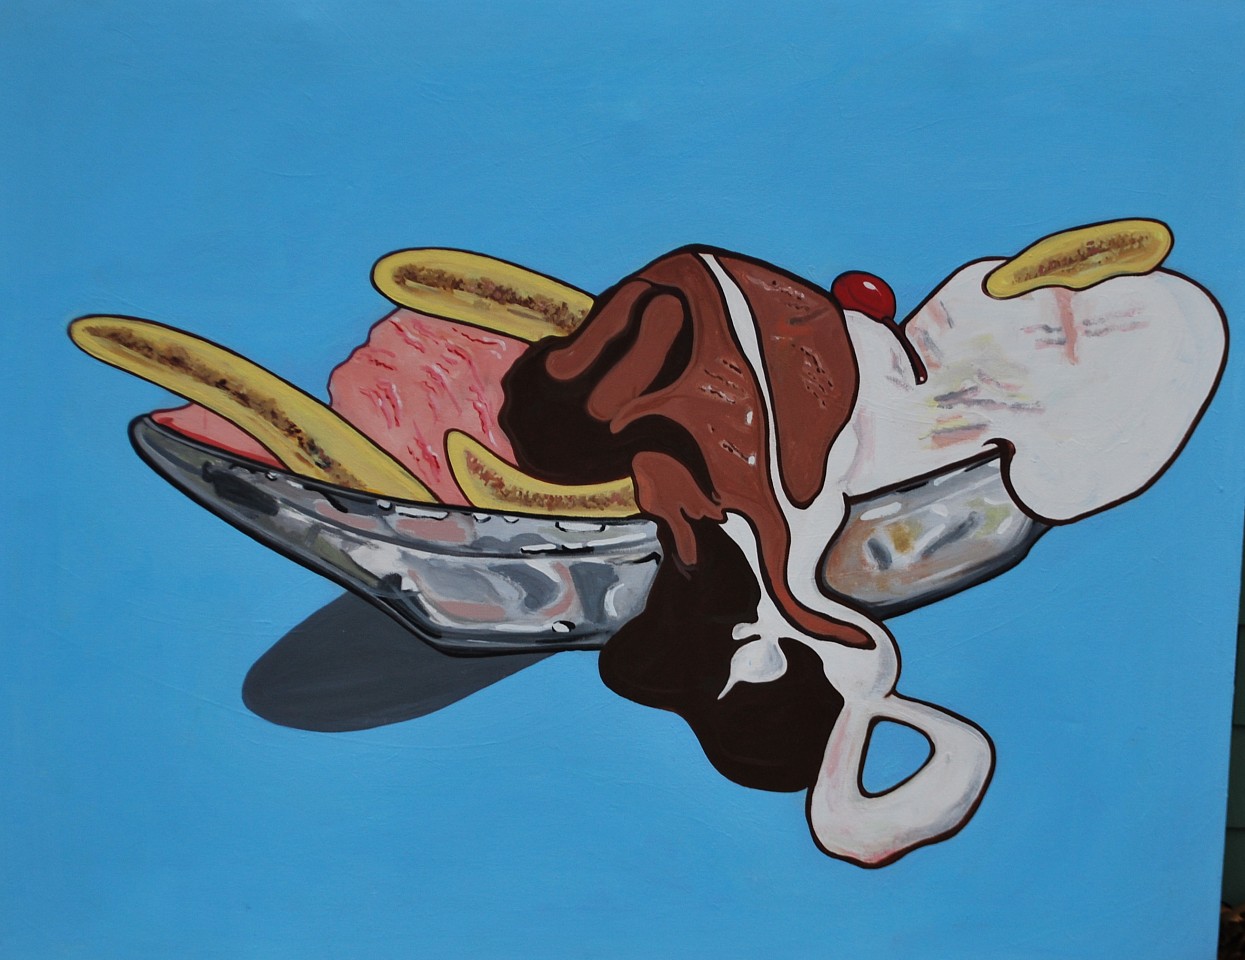 Marjorie Strider, Banana Split, 2010
Acrylic on canvas, 48 x 36 in.